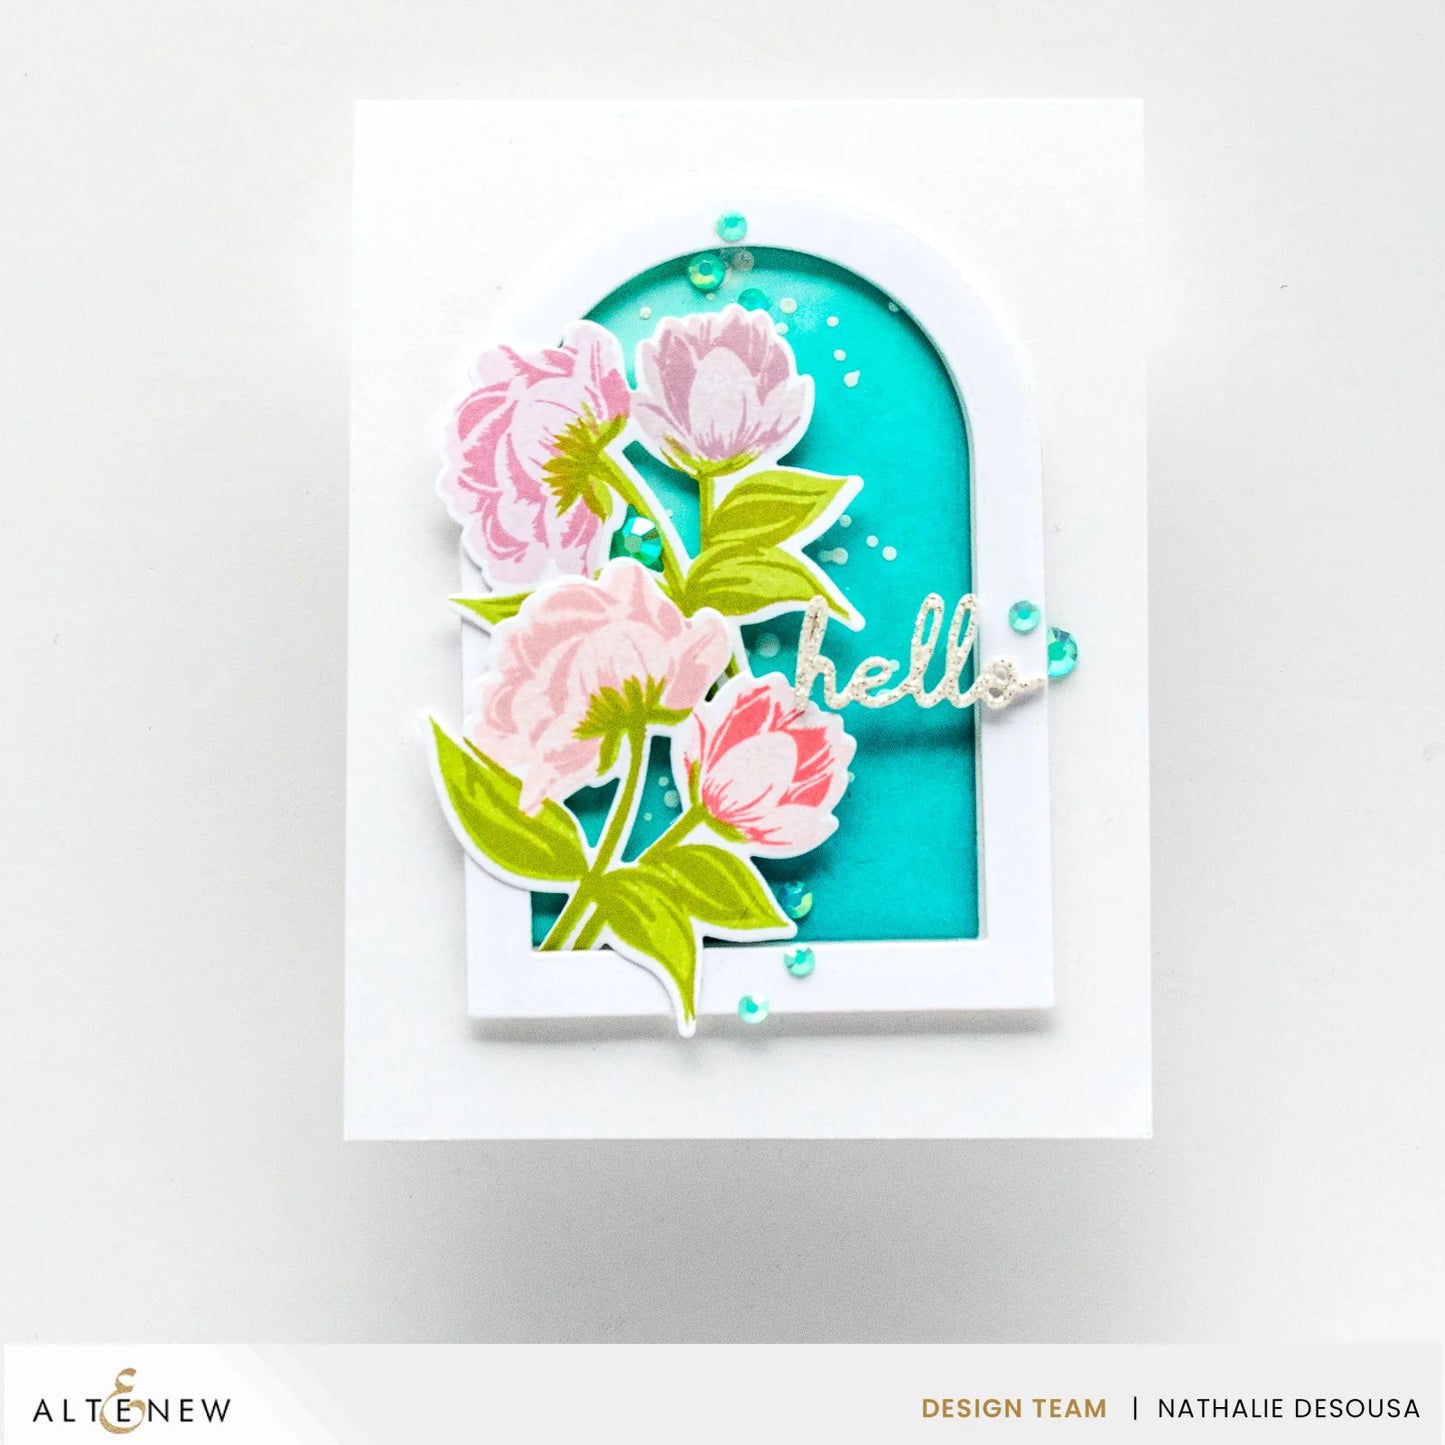 Altenew Mini Delight: Bountiful Blooms Stamp & Die Set